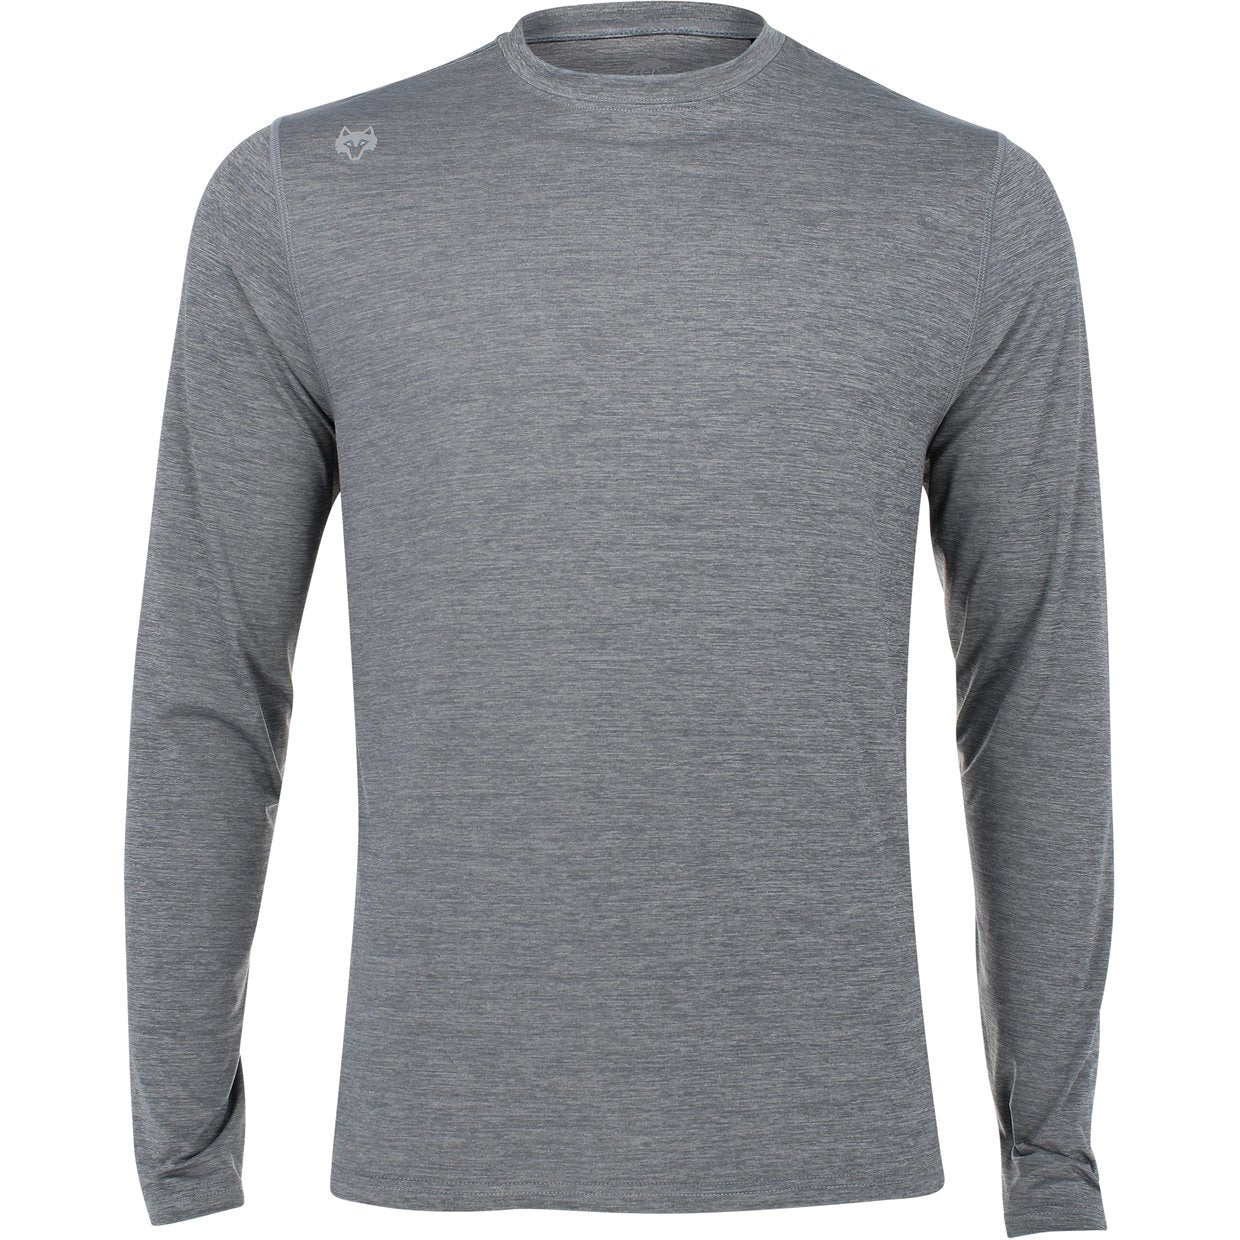 Greyson Guide Sport Men's Long Sleeve T-Shirt